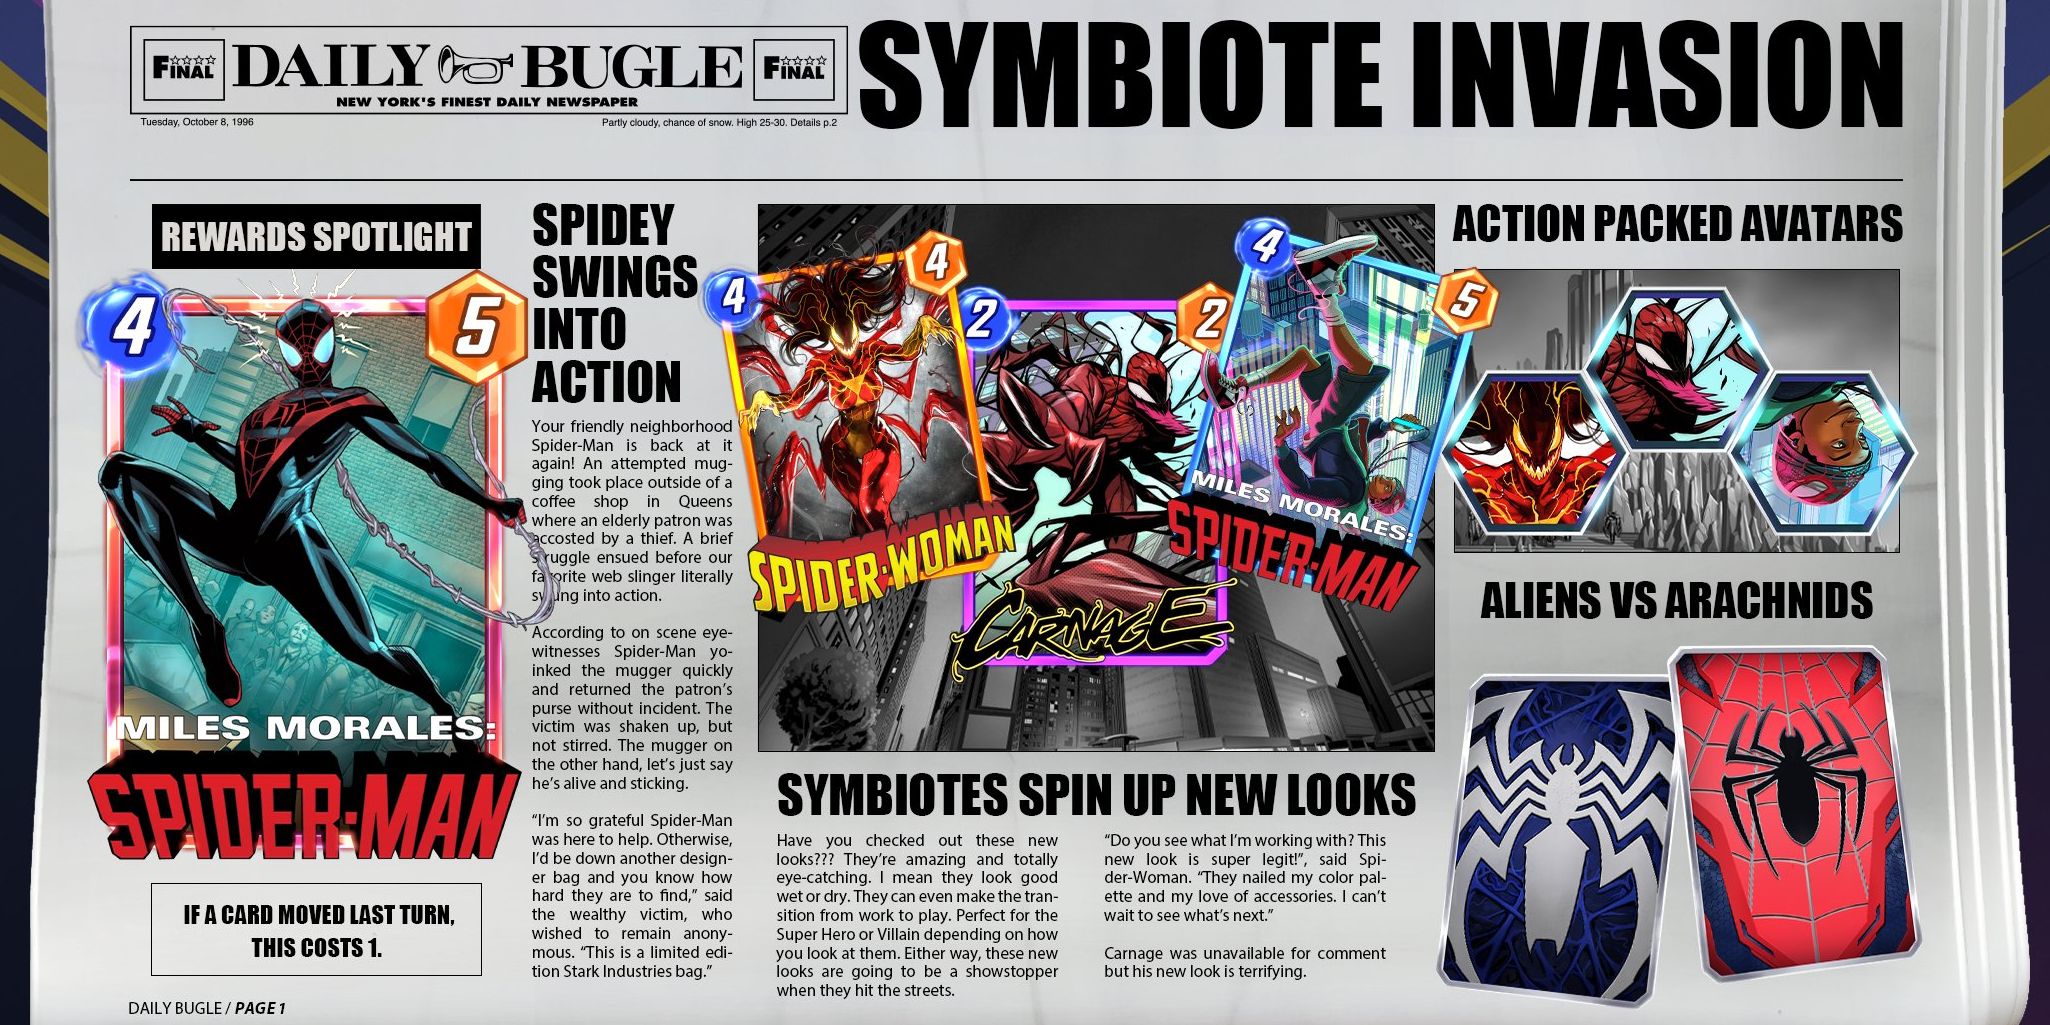 Symbiote Invasion Headline